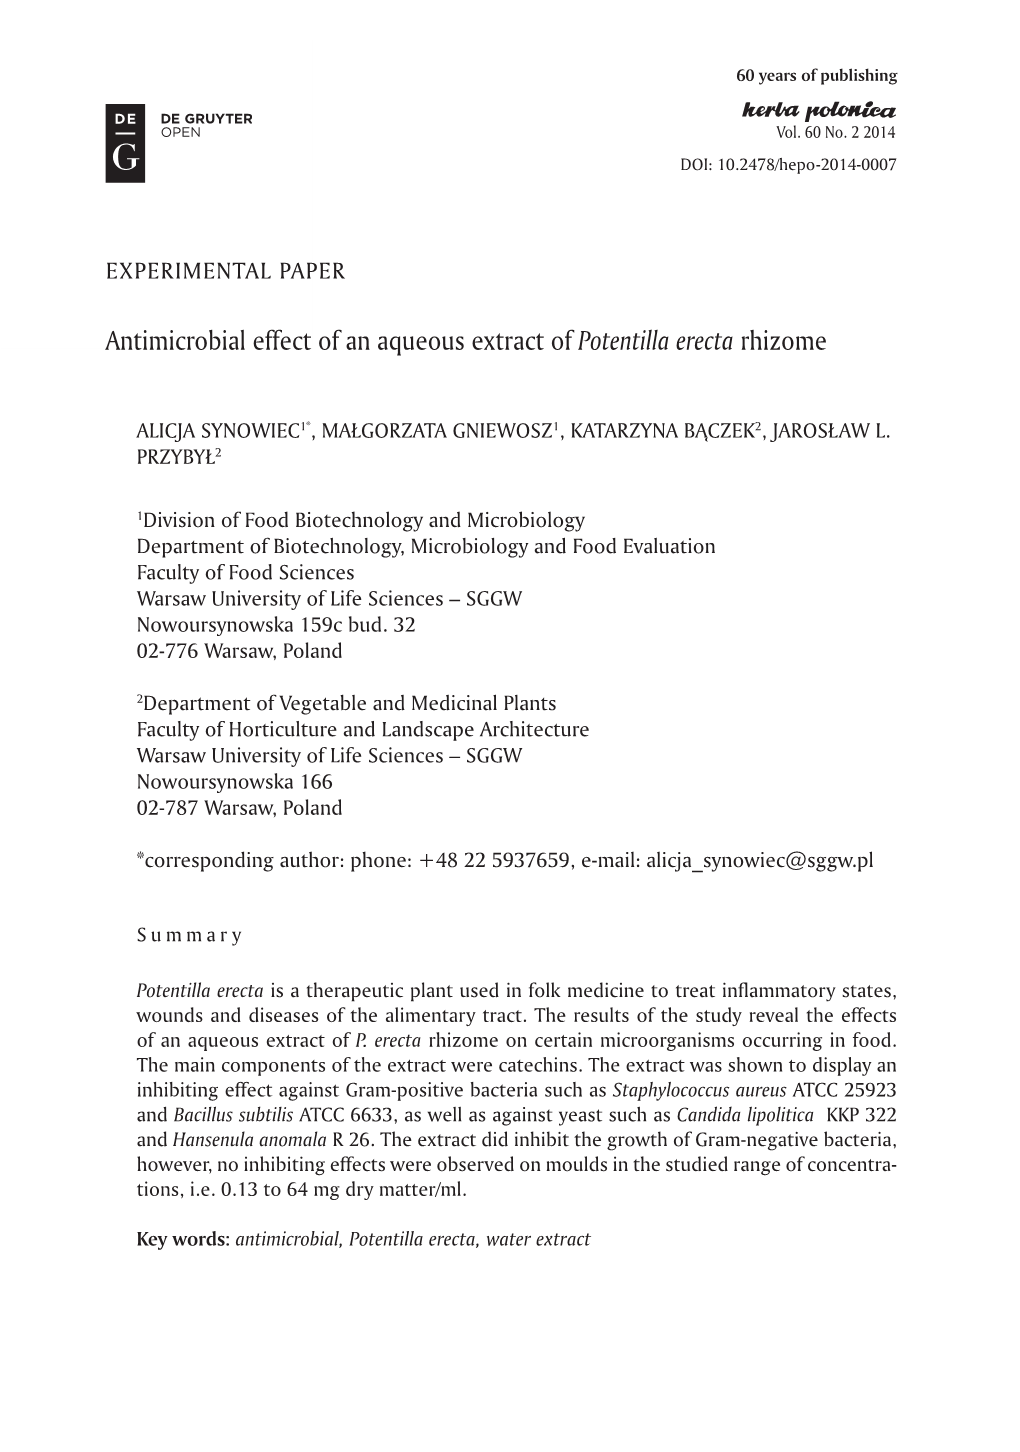 Antimicrobial Effect of an Aqueous Extract of Potentilla Erecta Rhizome